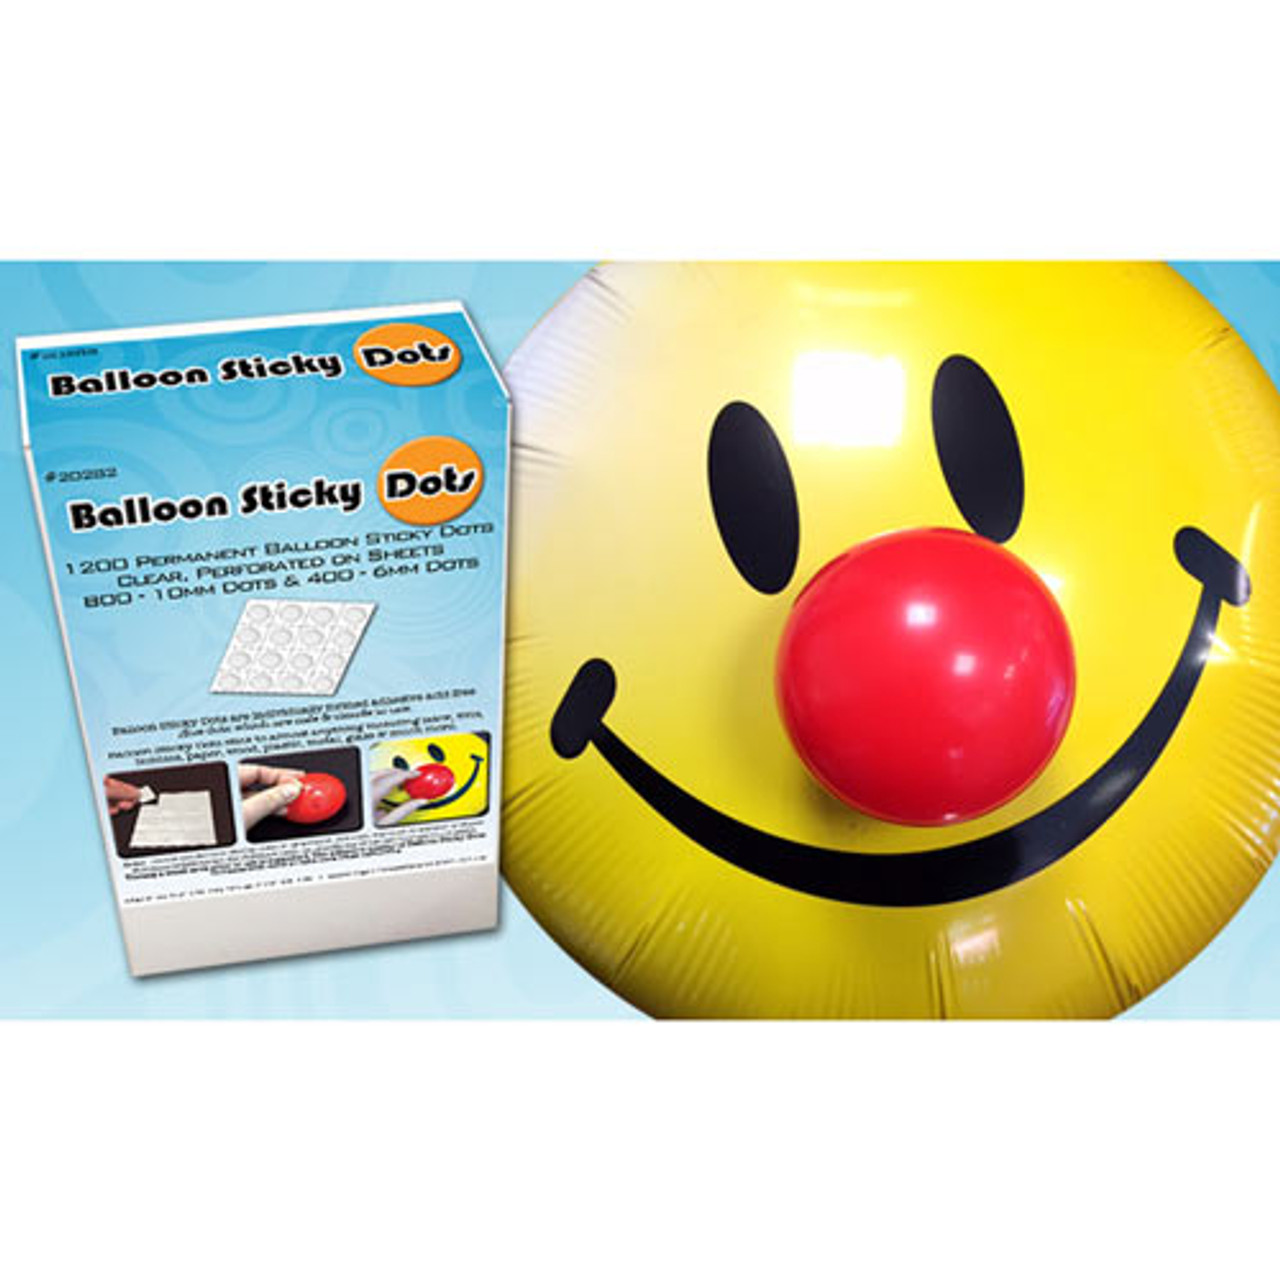 DIUJHUUY 1200 Pieces Balloon Glue Dots, Double Sided Balloon